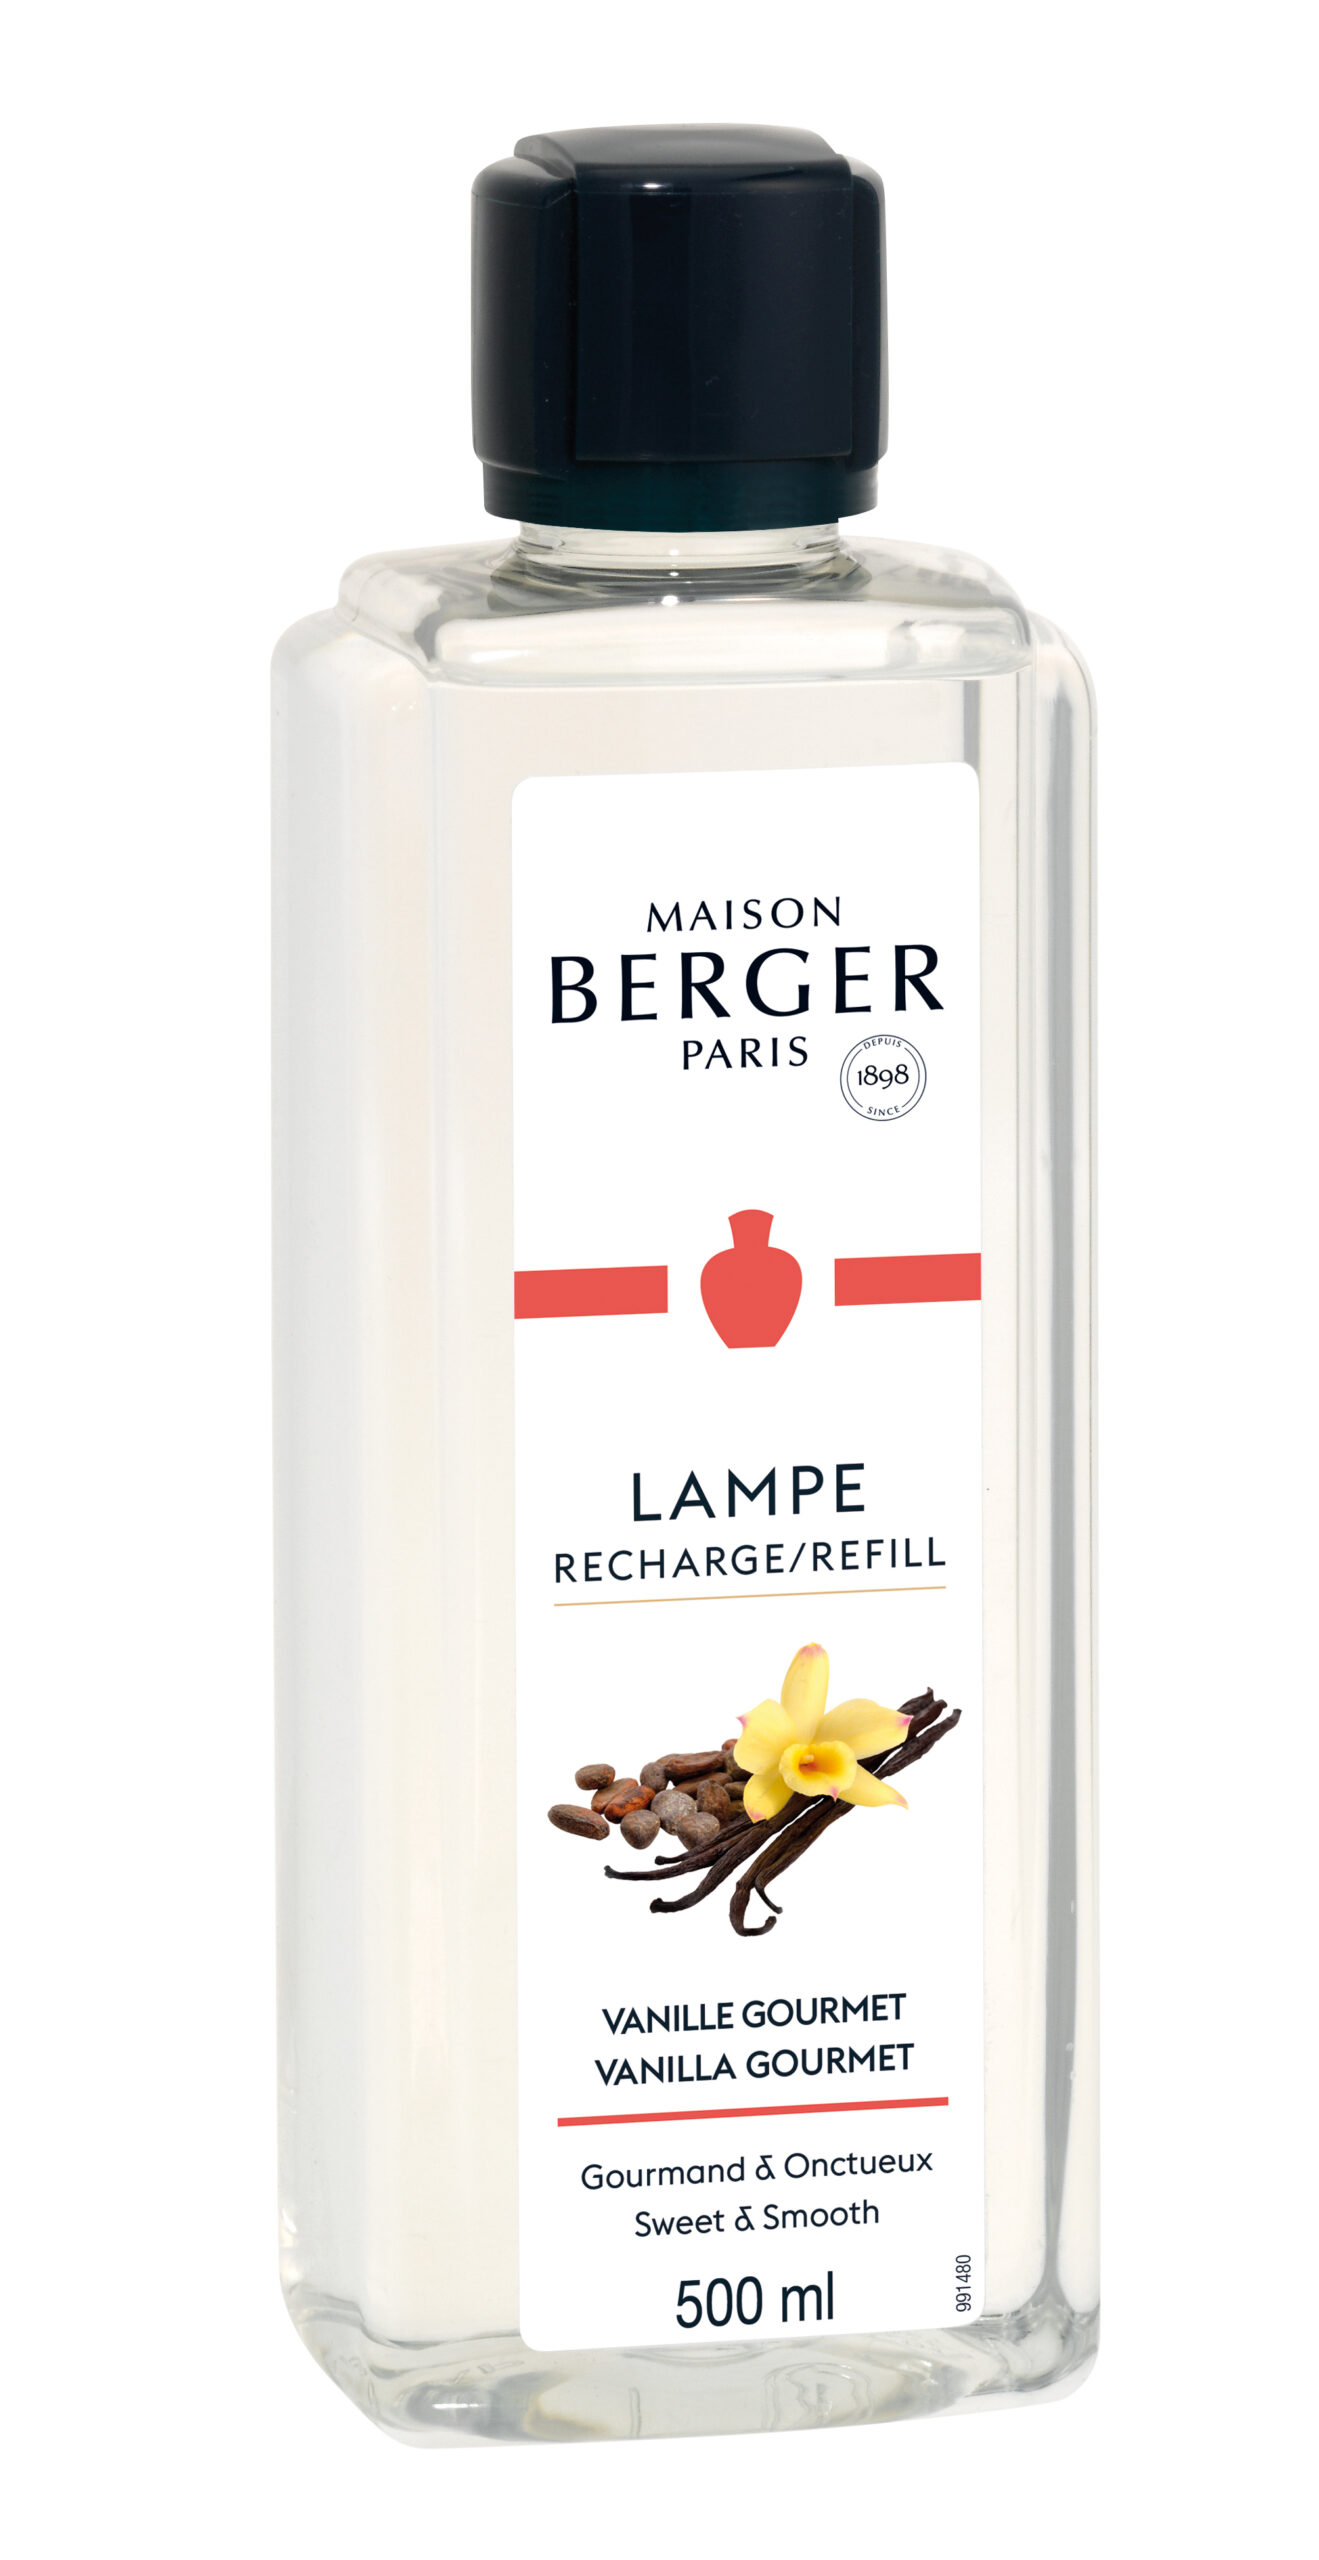 Maison Berger Paris - parfum Vanilla Gourmet - 500 ml